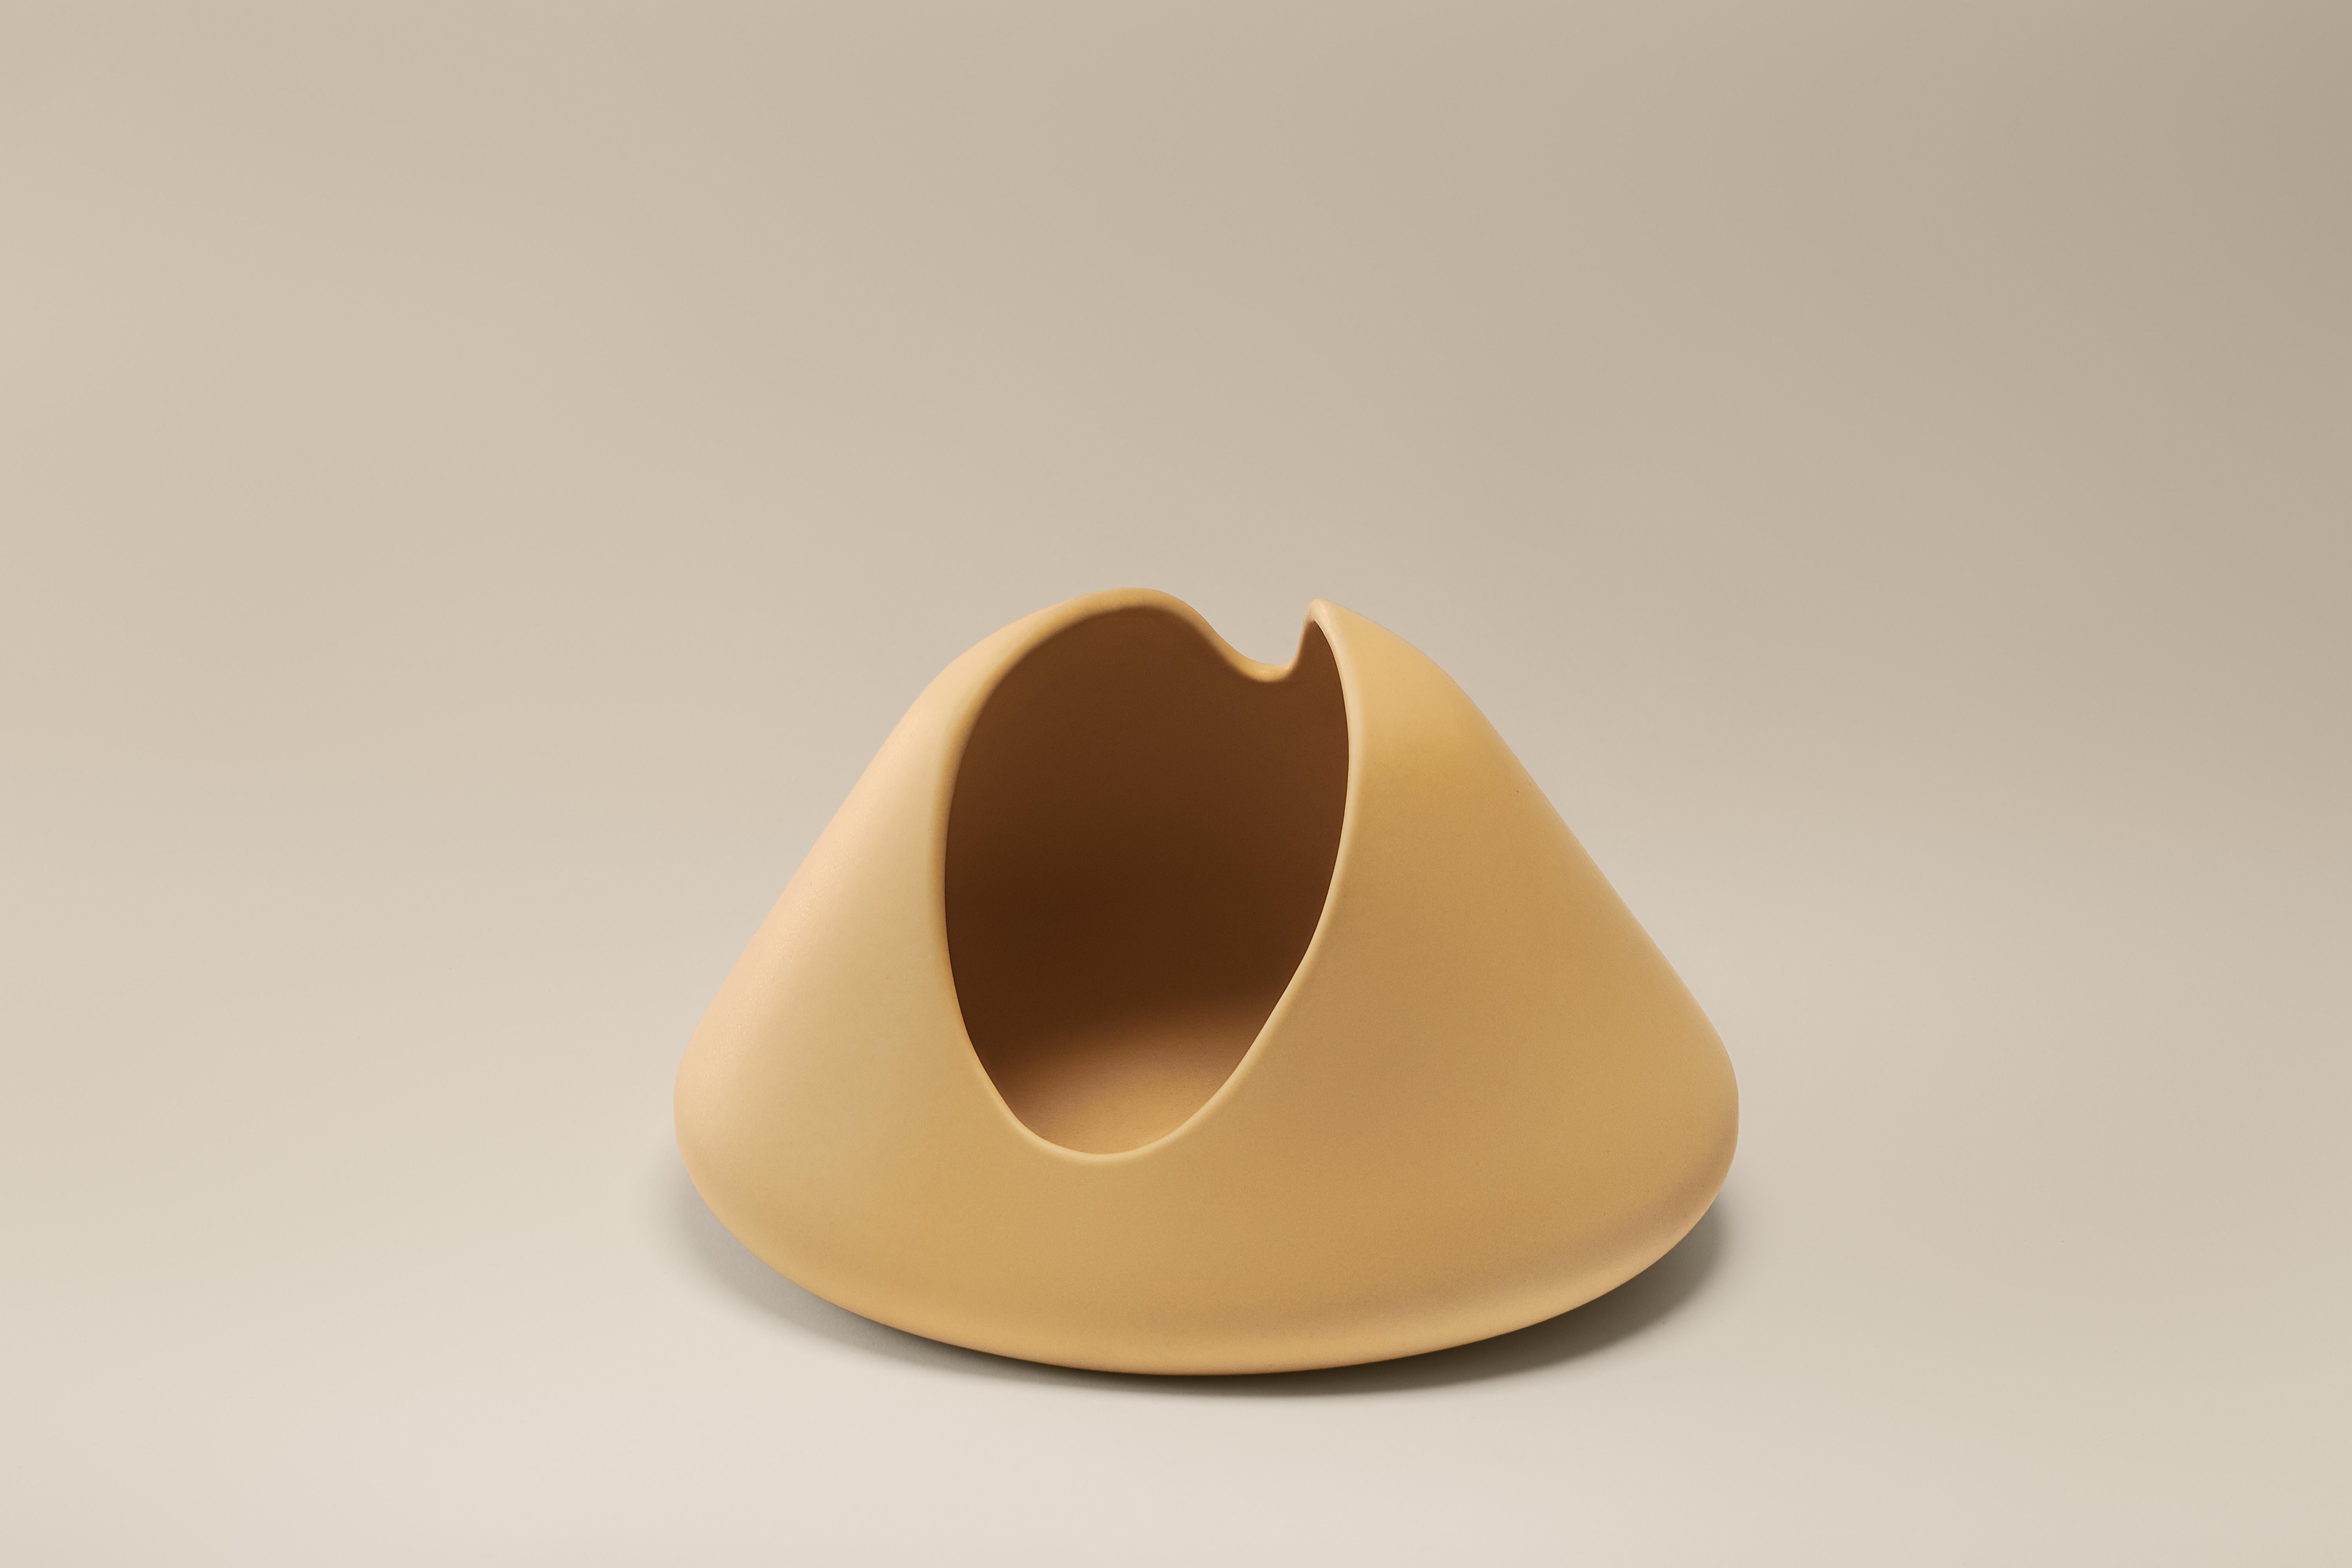 Boro vase by Lilia Cruz Corona Garduño
Dimensions: W 22.3 x D 19.5 x H 13 cm
Materials: High-temperature ceramics (Stoneware) and vitrified glaze.

Platalea studio was born out of a passion for both art and design. We love how both are so